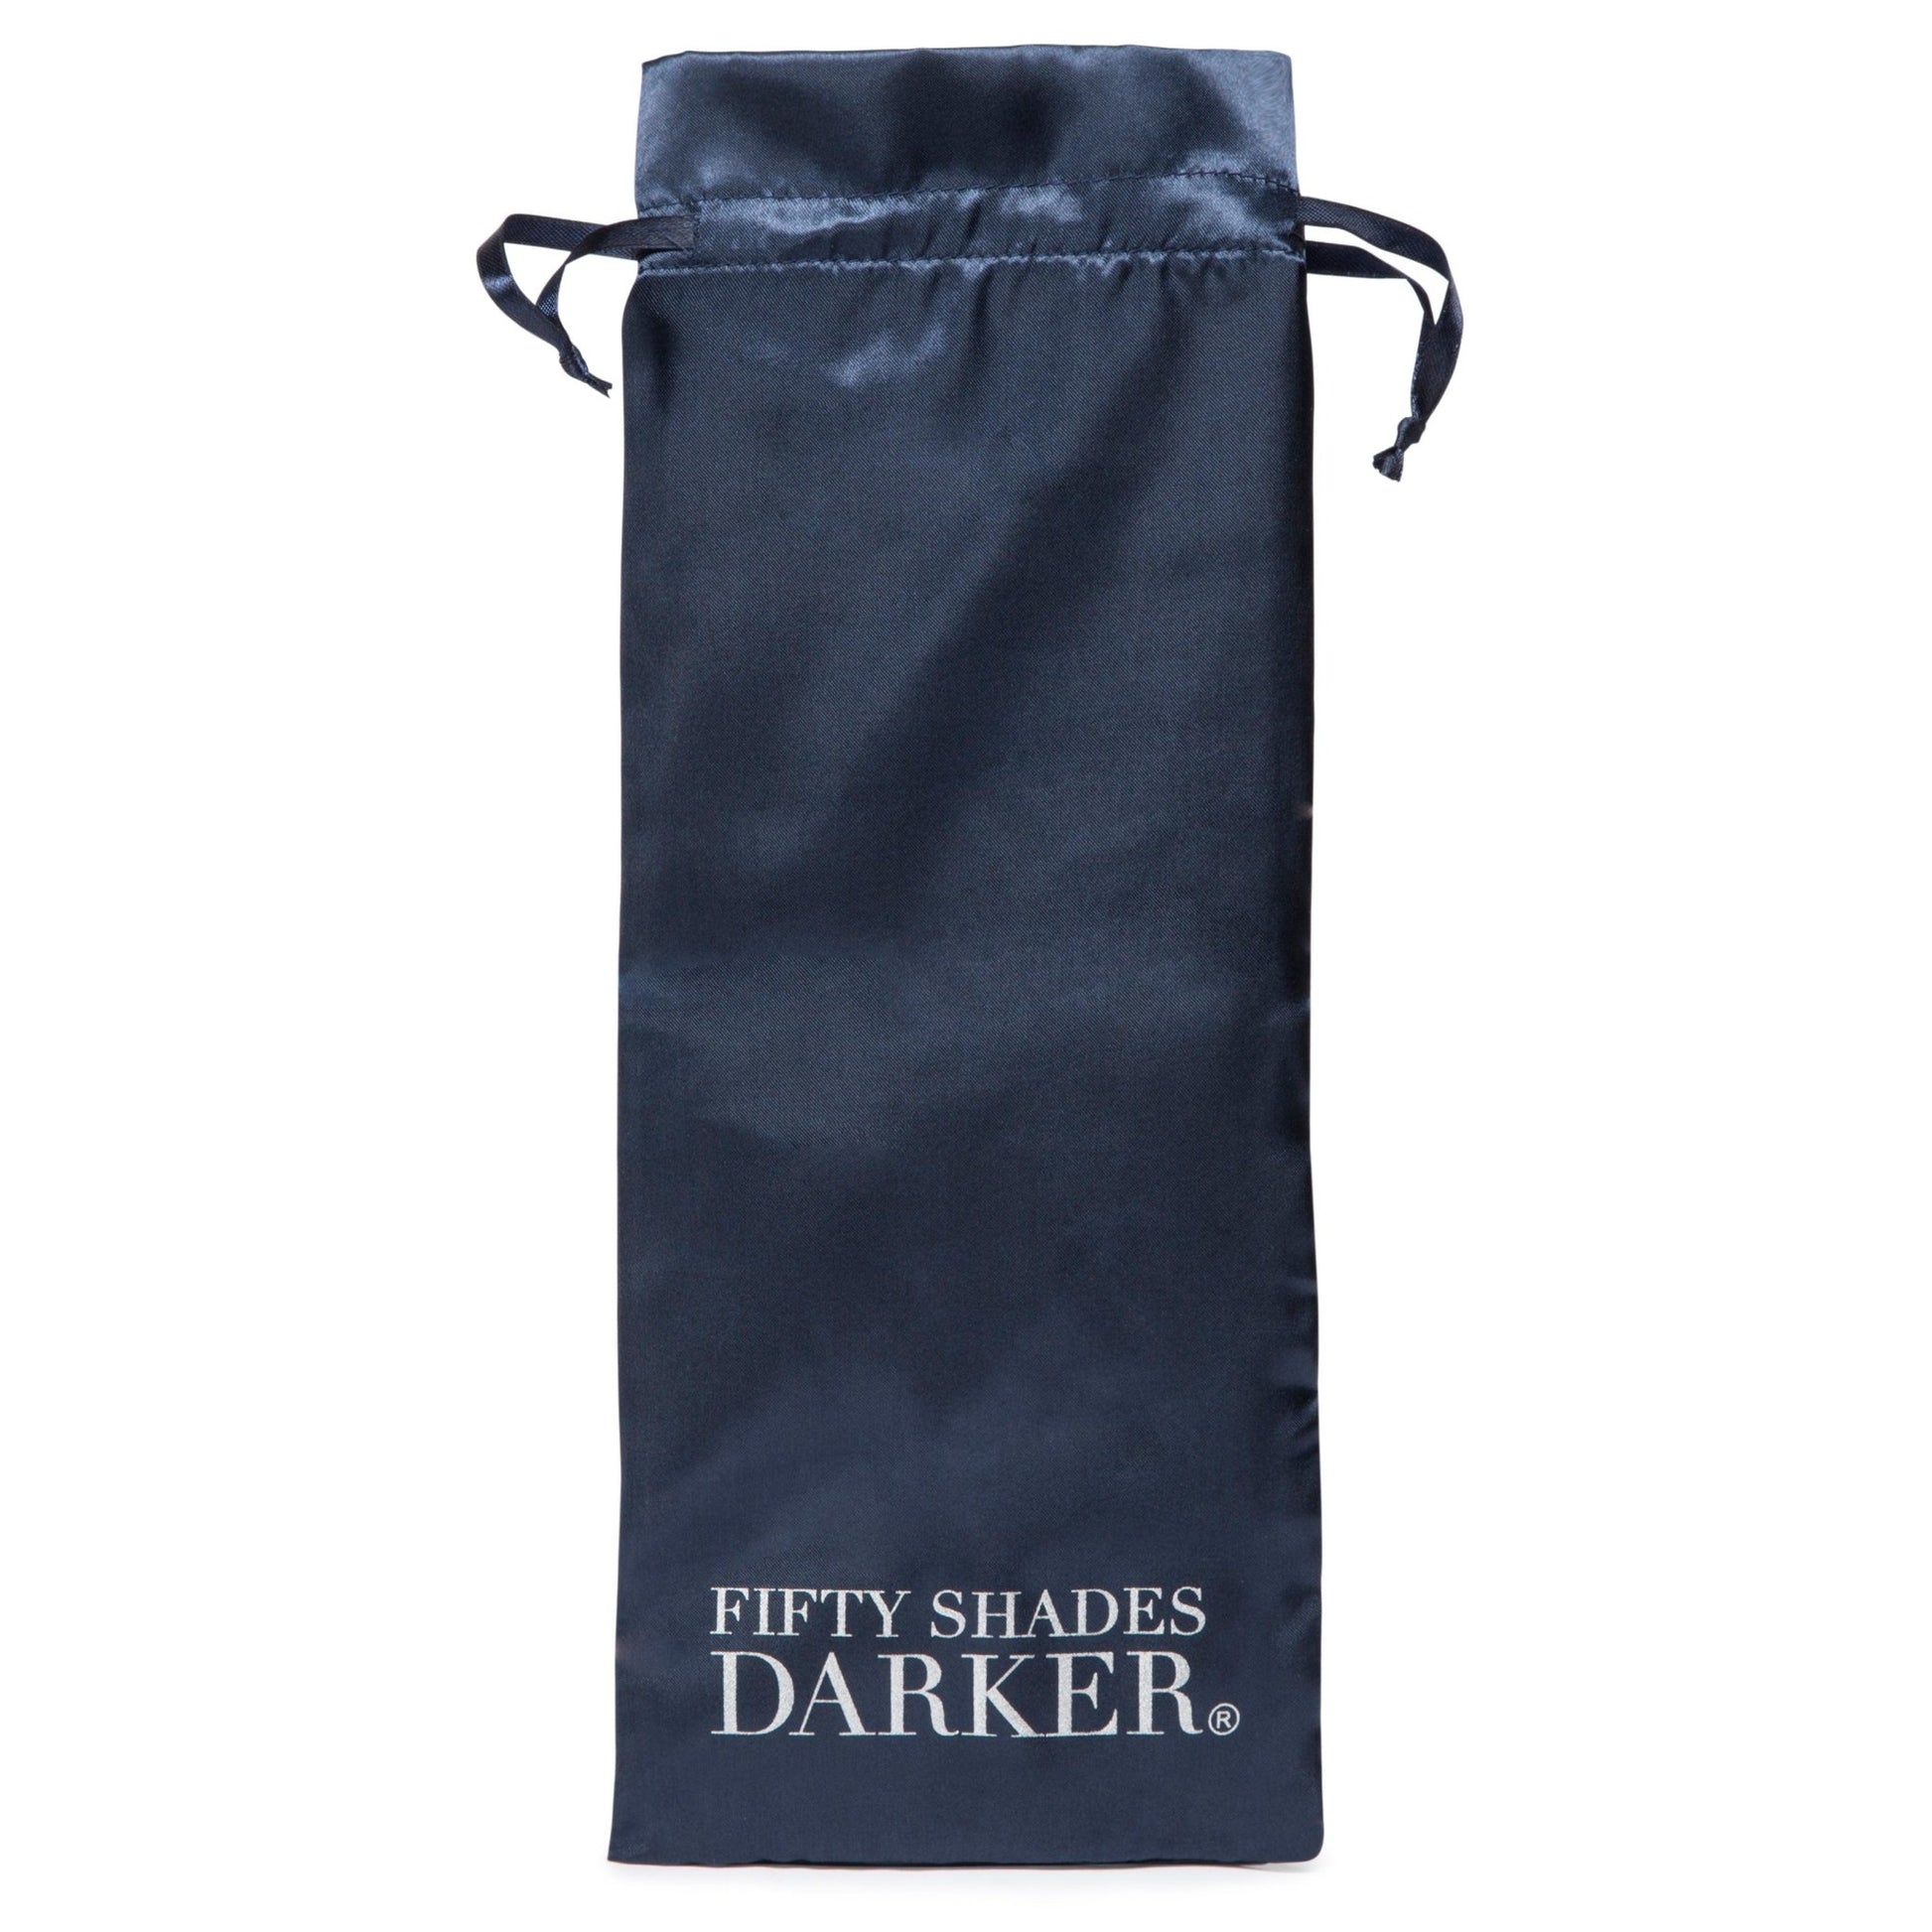 50 Shades Of Grey - Fifty Shades Of Grey Darker - Oh My Rabbit vibrator - Yonifyer